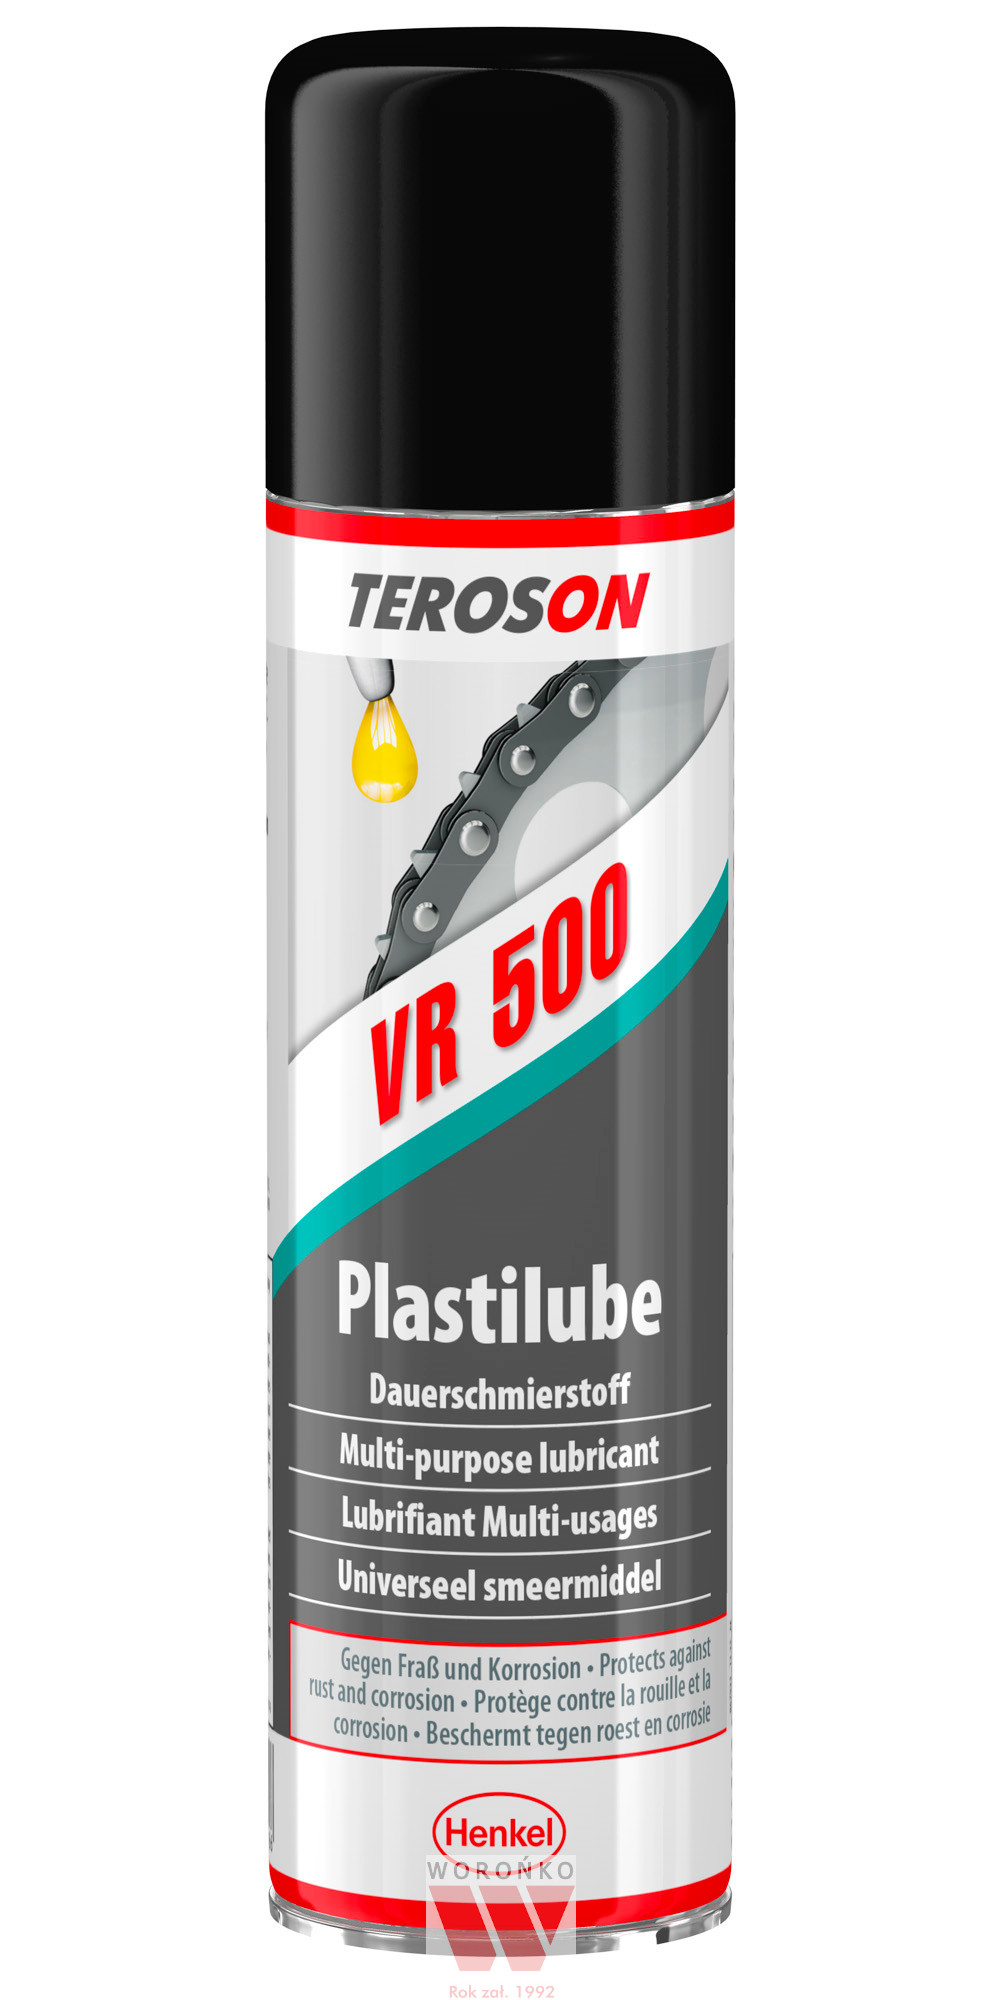 Teroson VR 500 - 300 ml lubricant)